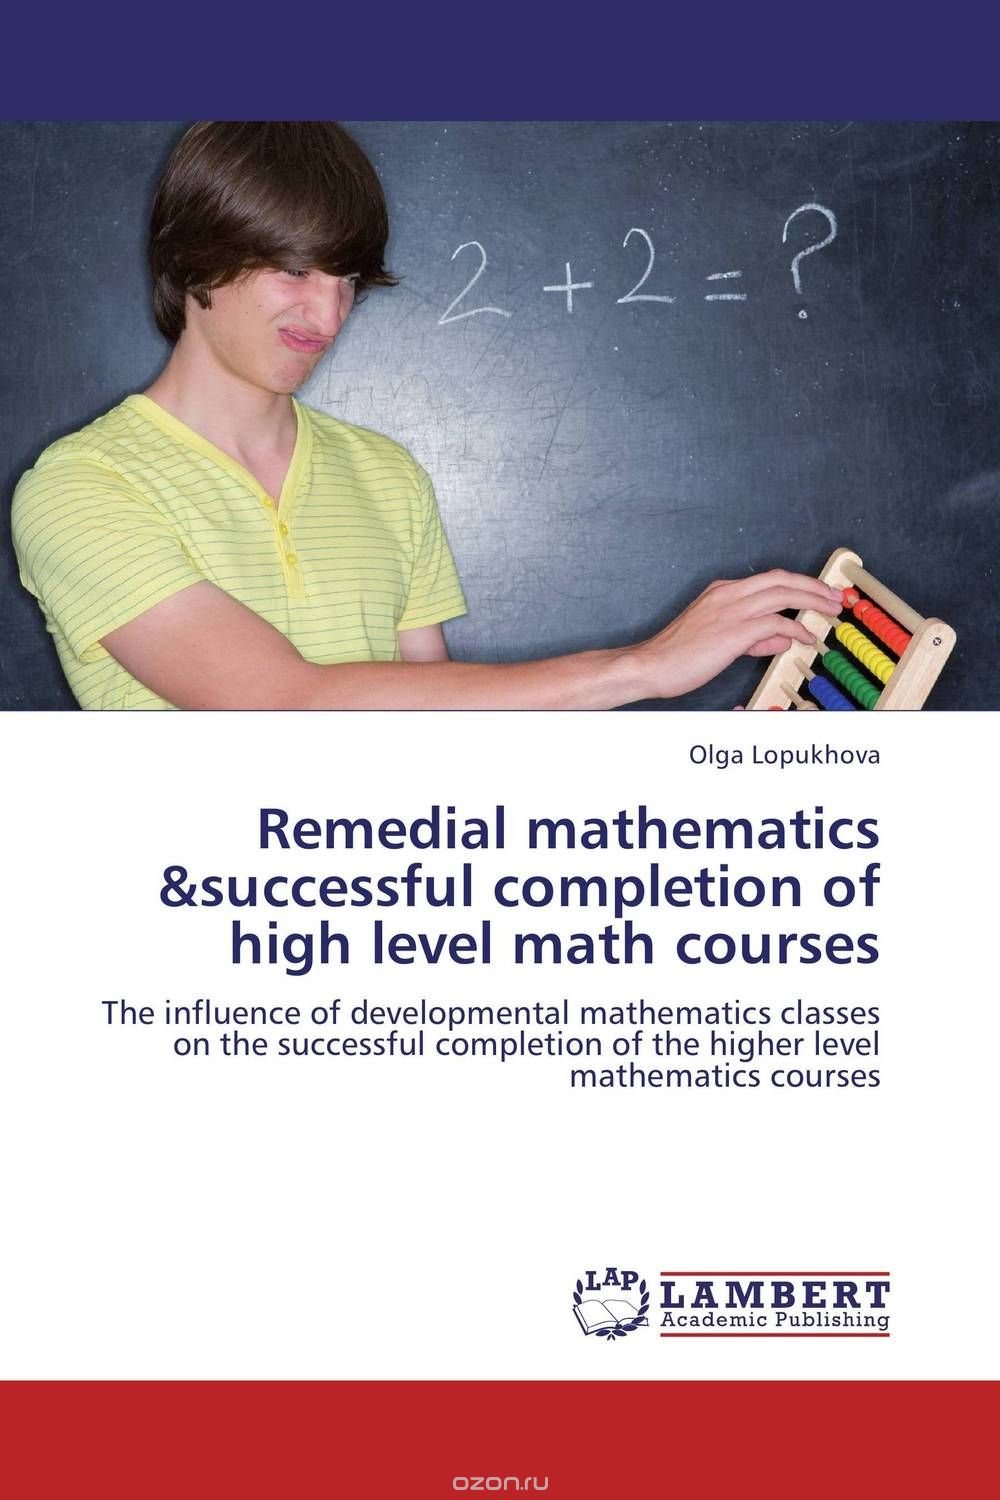 Скачать книгу "Remedial mathematics &successful completion of high level math courses"